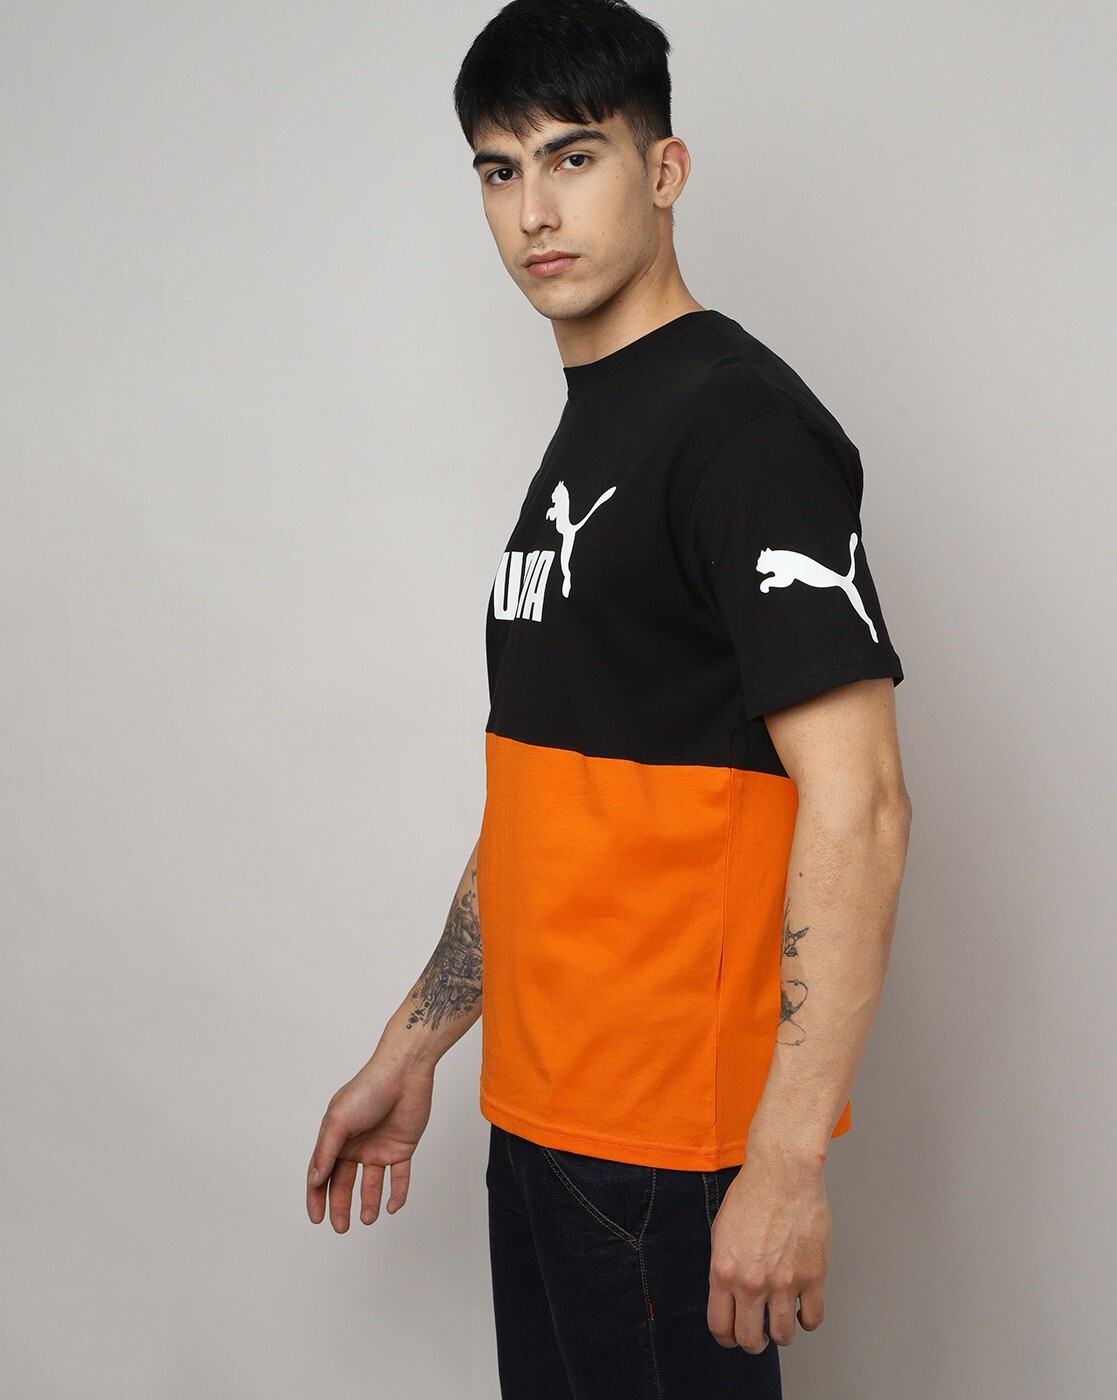 & Tshirts Black Online by for Orange Puma Men Buy